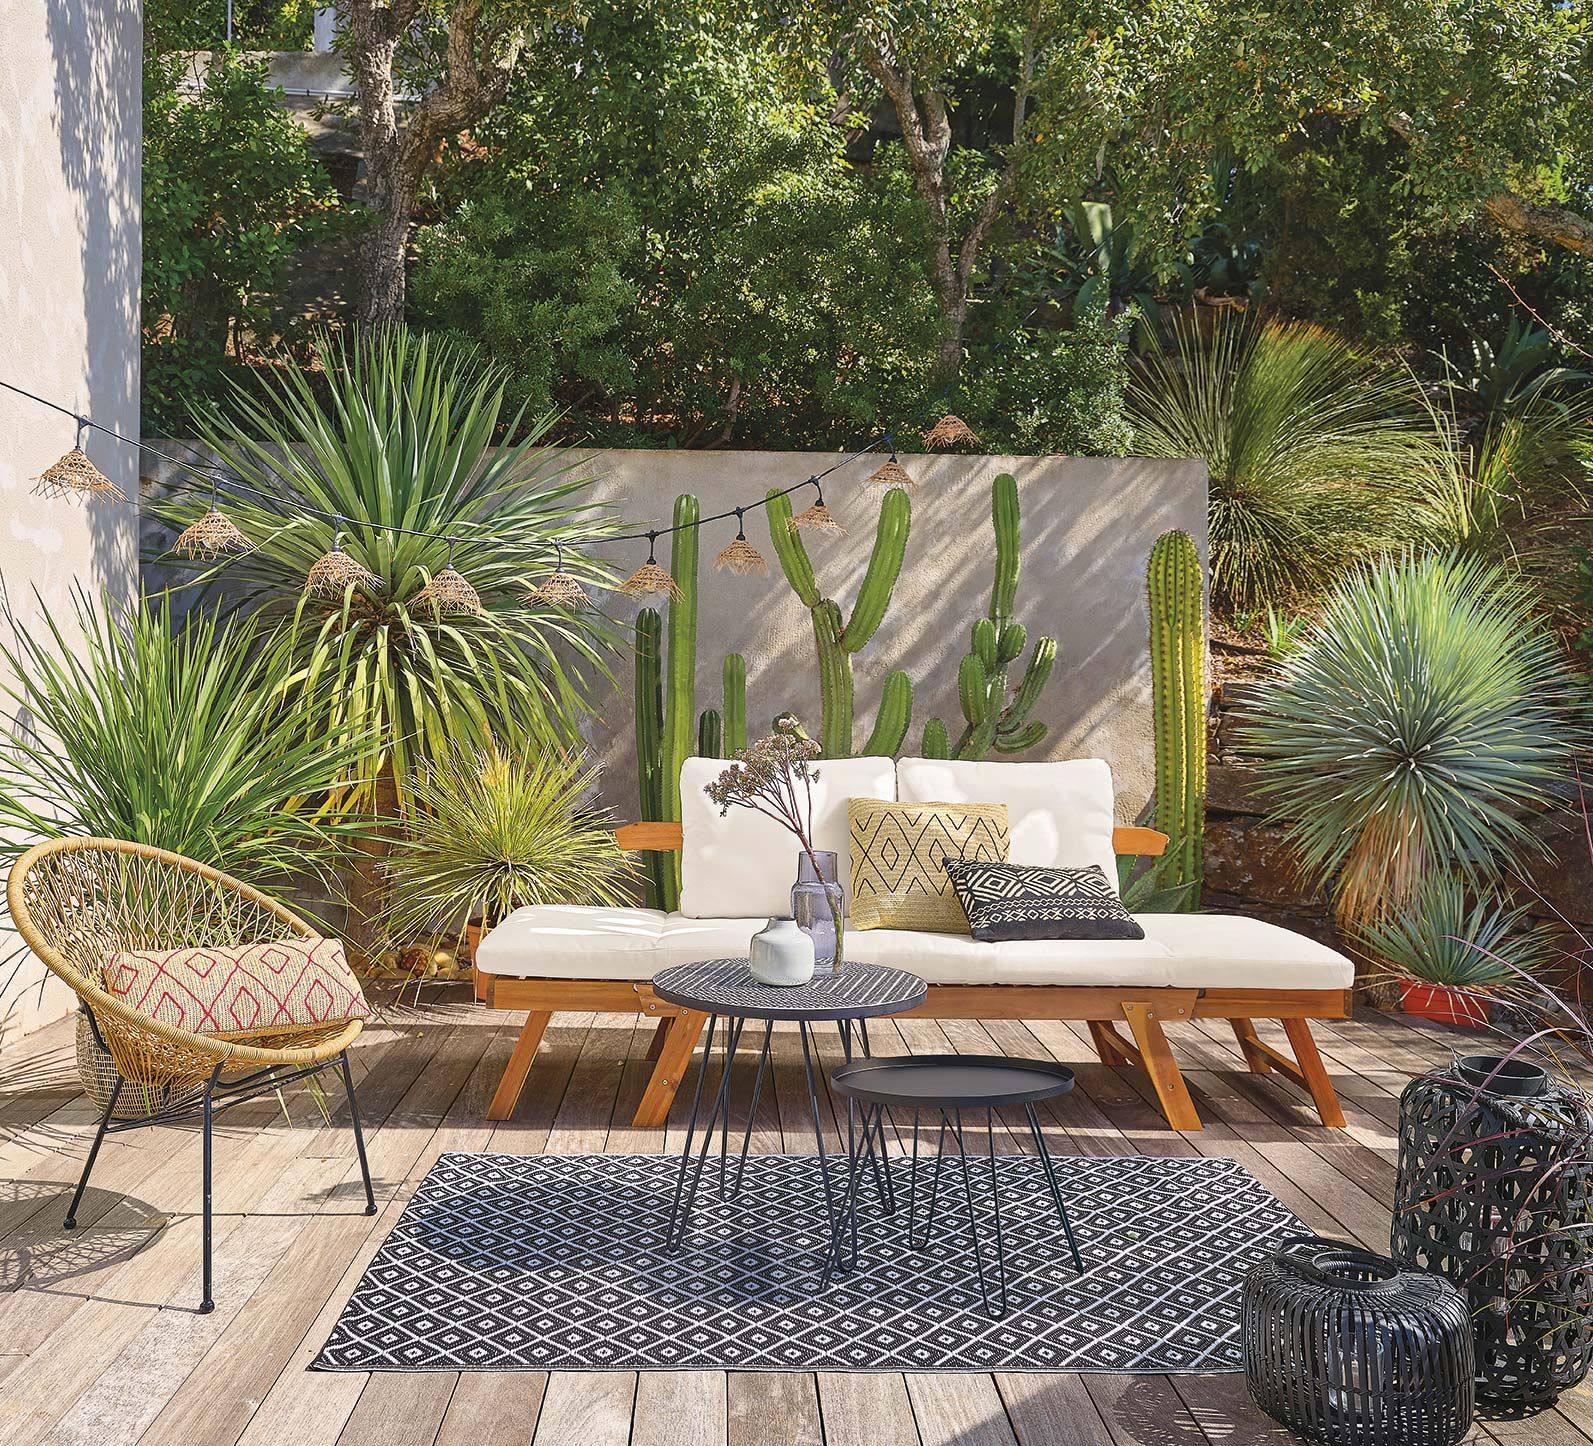 Muebles de exterior para tu terraza o jardín